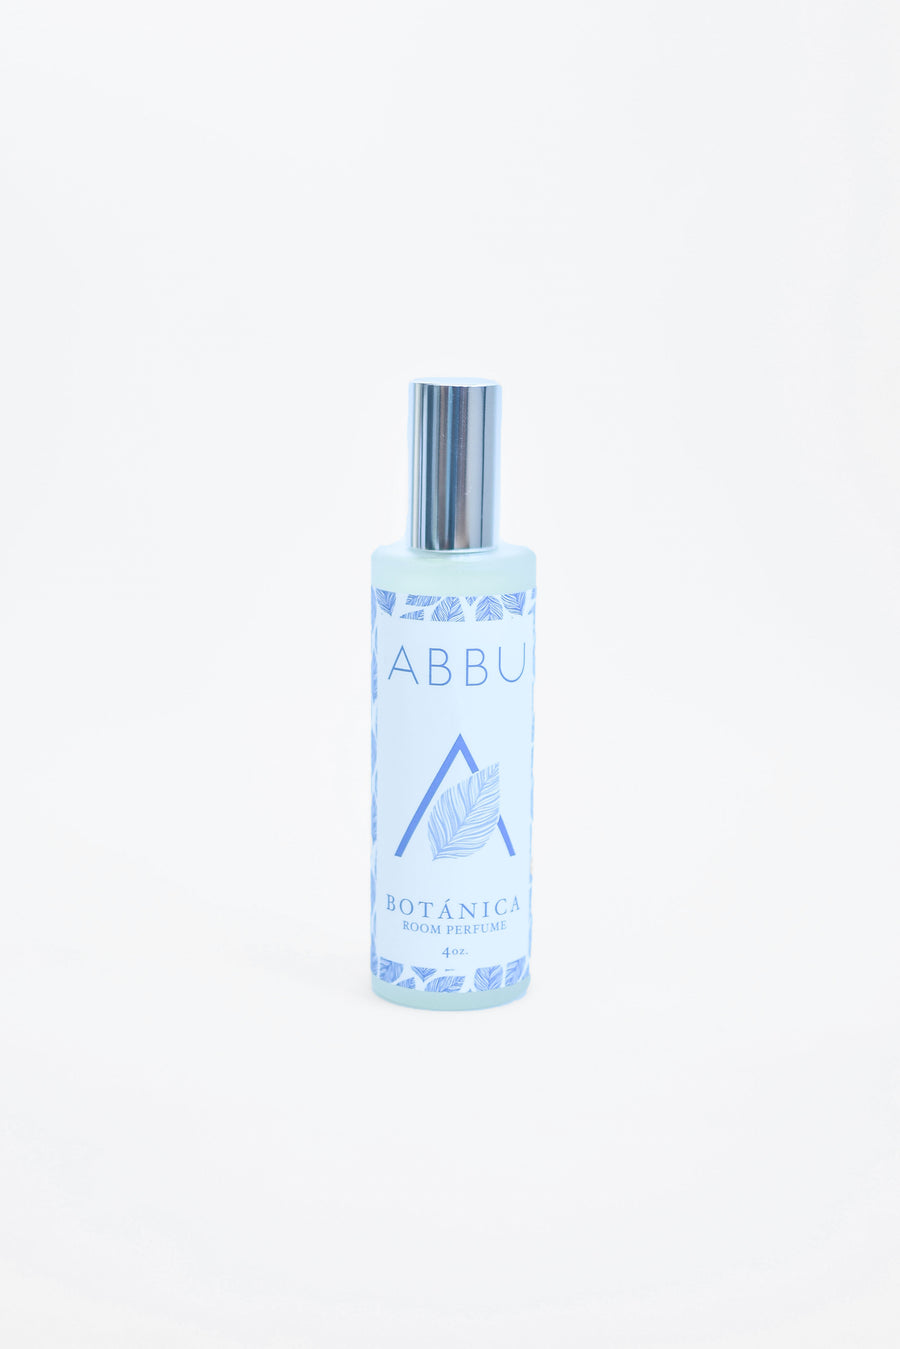 Abbu Room Perfume Botanica, 8 OZ